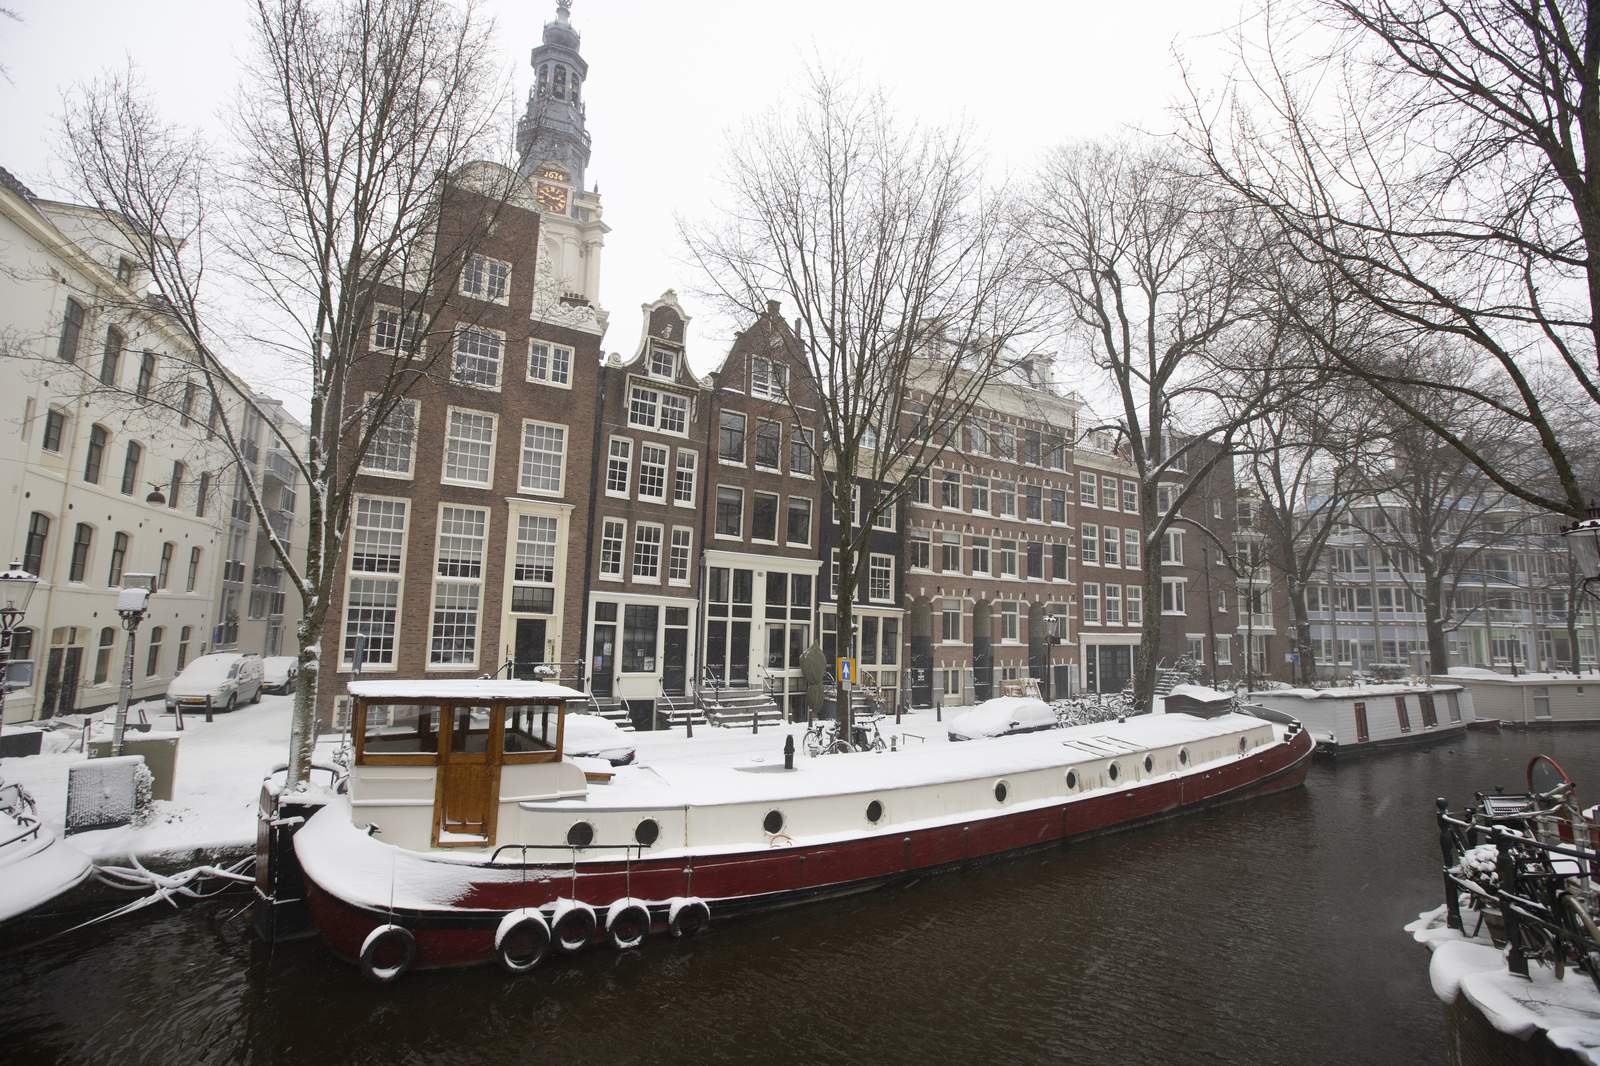 Dutch will extend coronavirus curfew until March 3